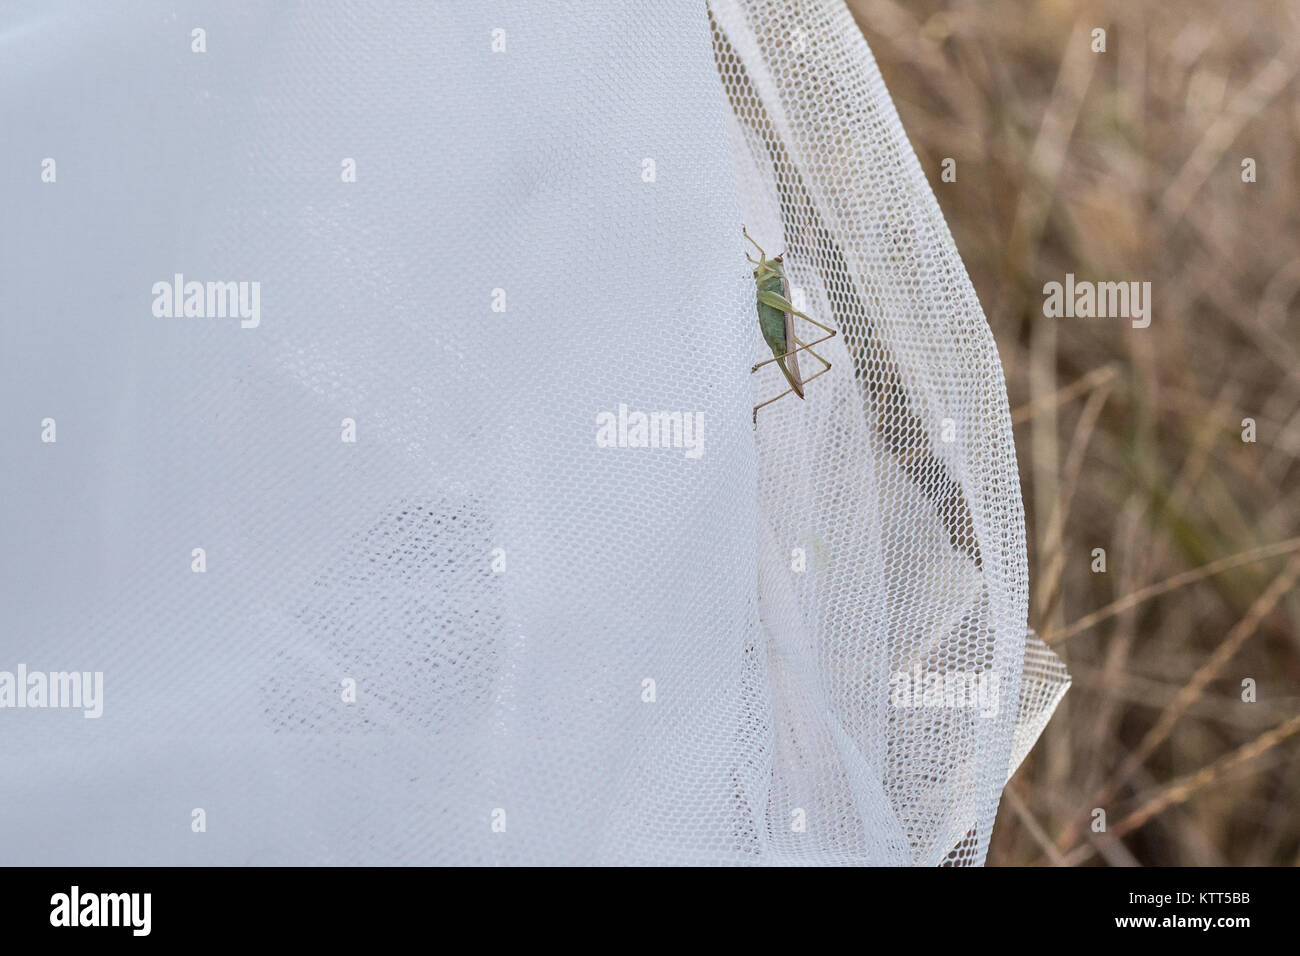 Grasshopper on a wedding dress Stock Photo